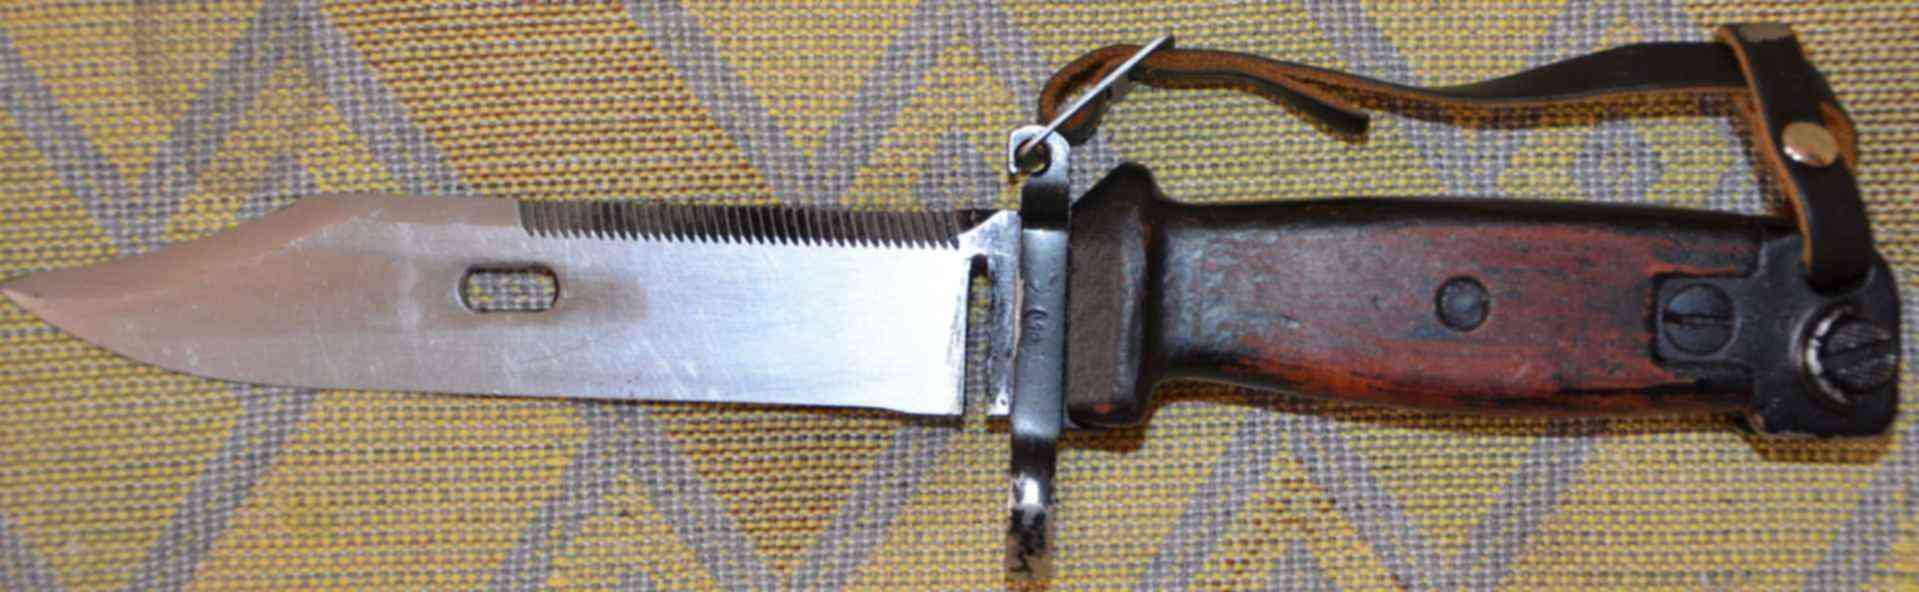 Штык нож Аксу 74